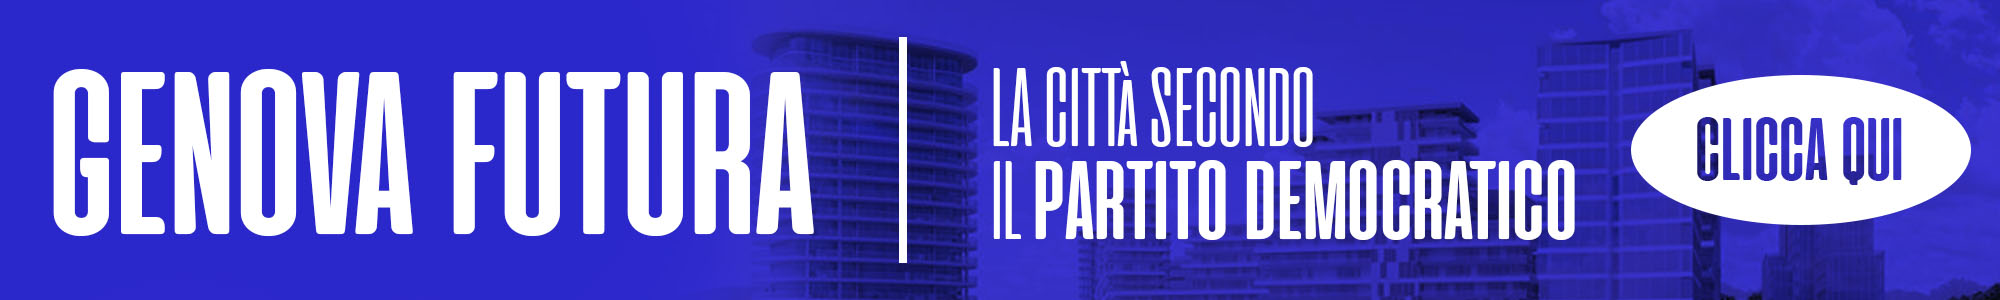 Banner - Genova Futura